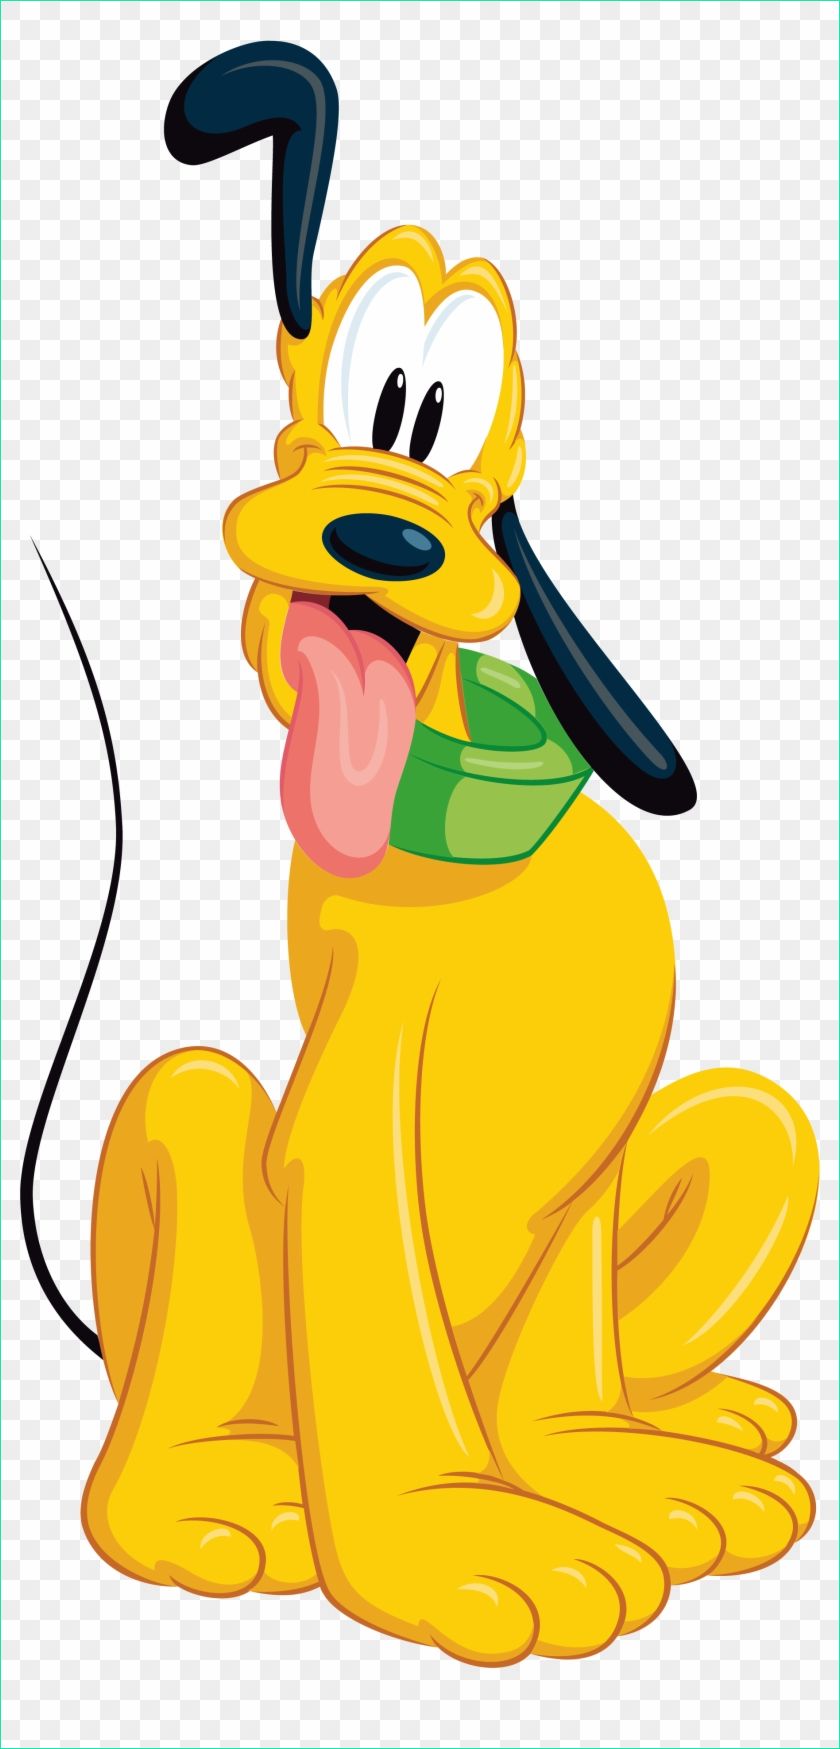 Pluto Disney Élégant Images Pluto Disney Transparent Cartoon Pluto Disney Clipart